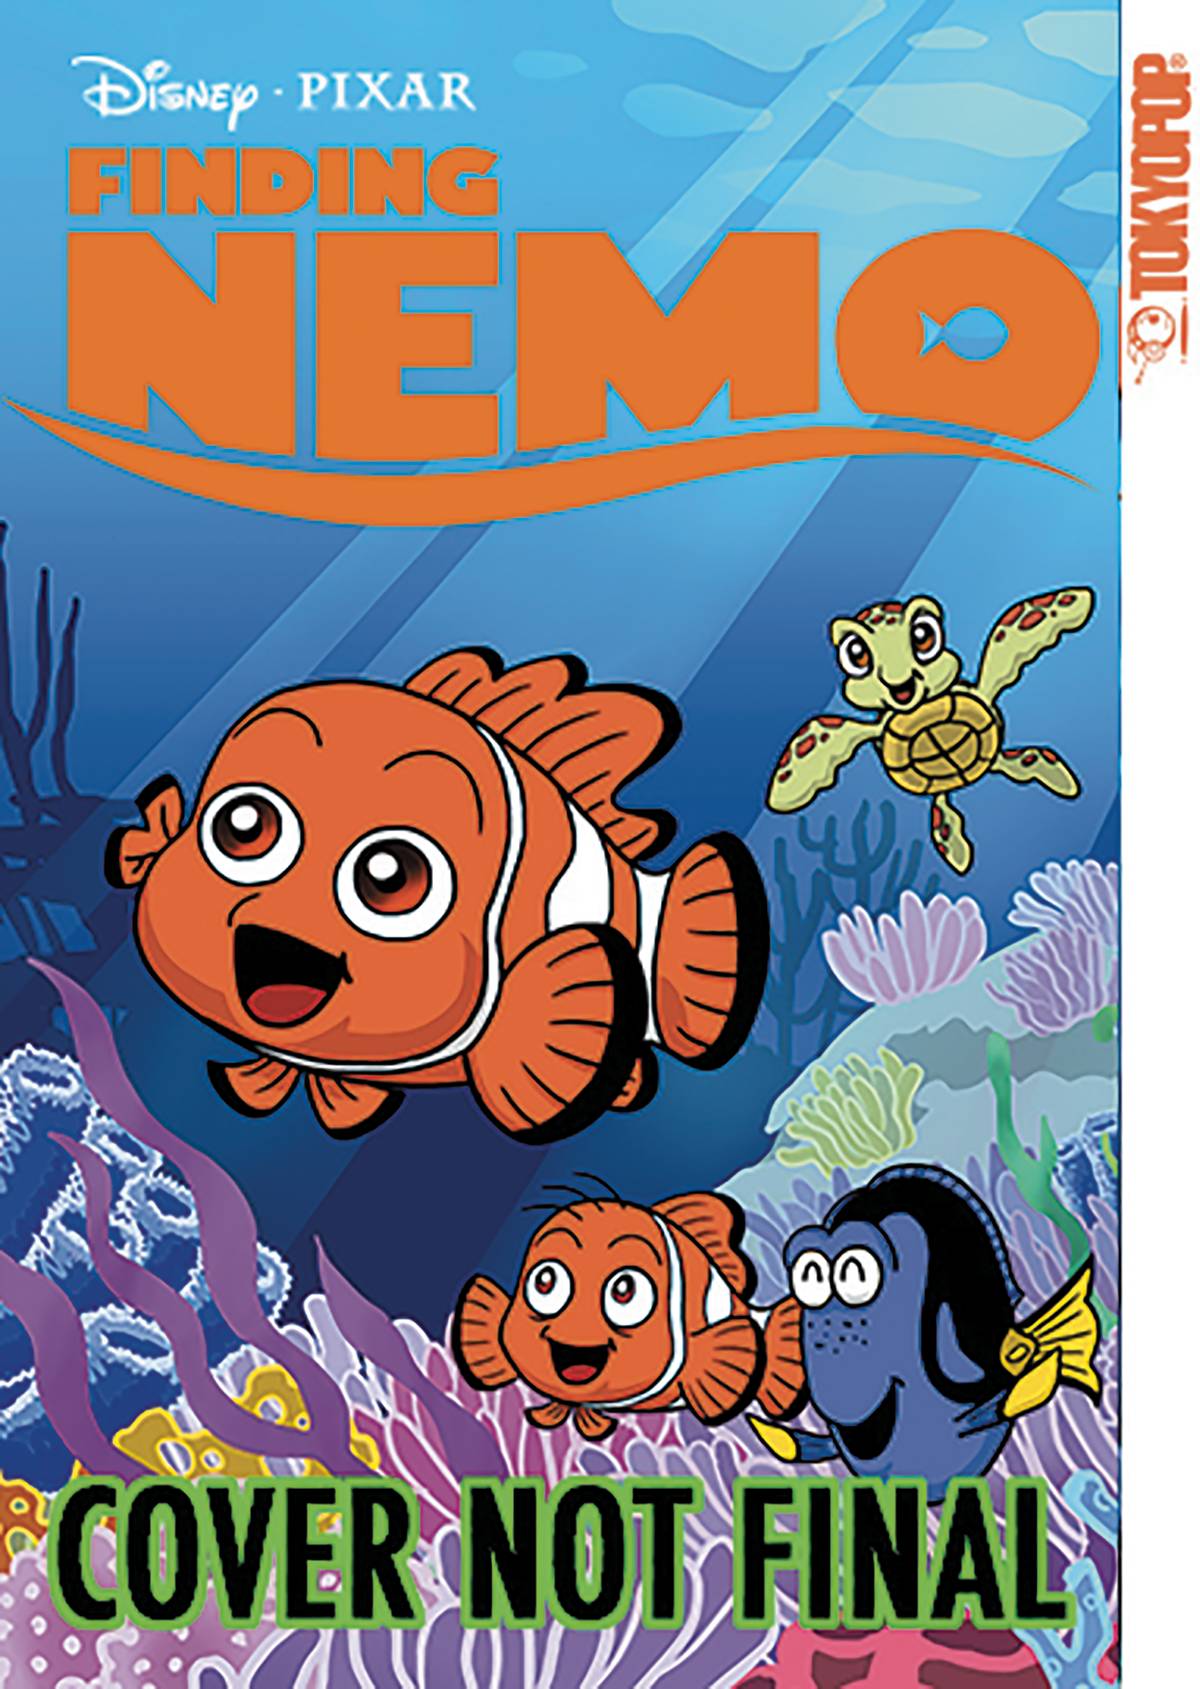 Disney Pixar Finding Nemo MangaSpecial Collectors Edition